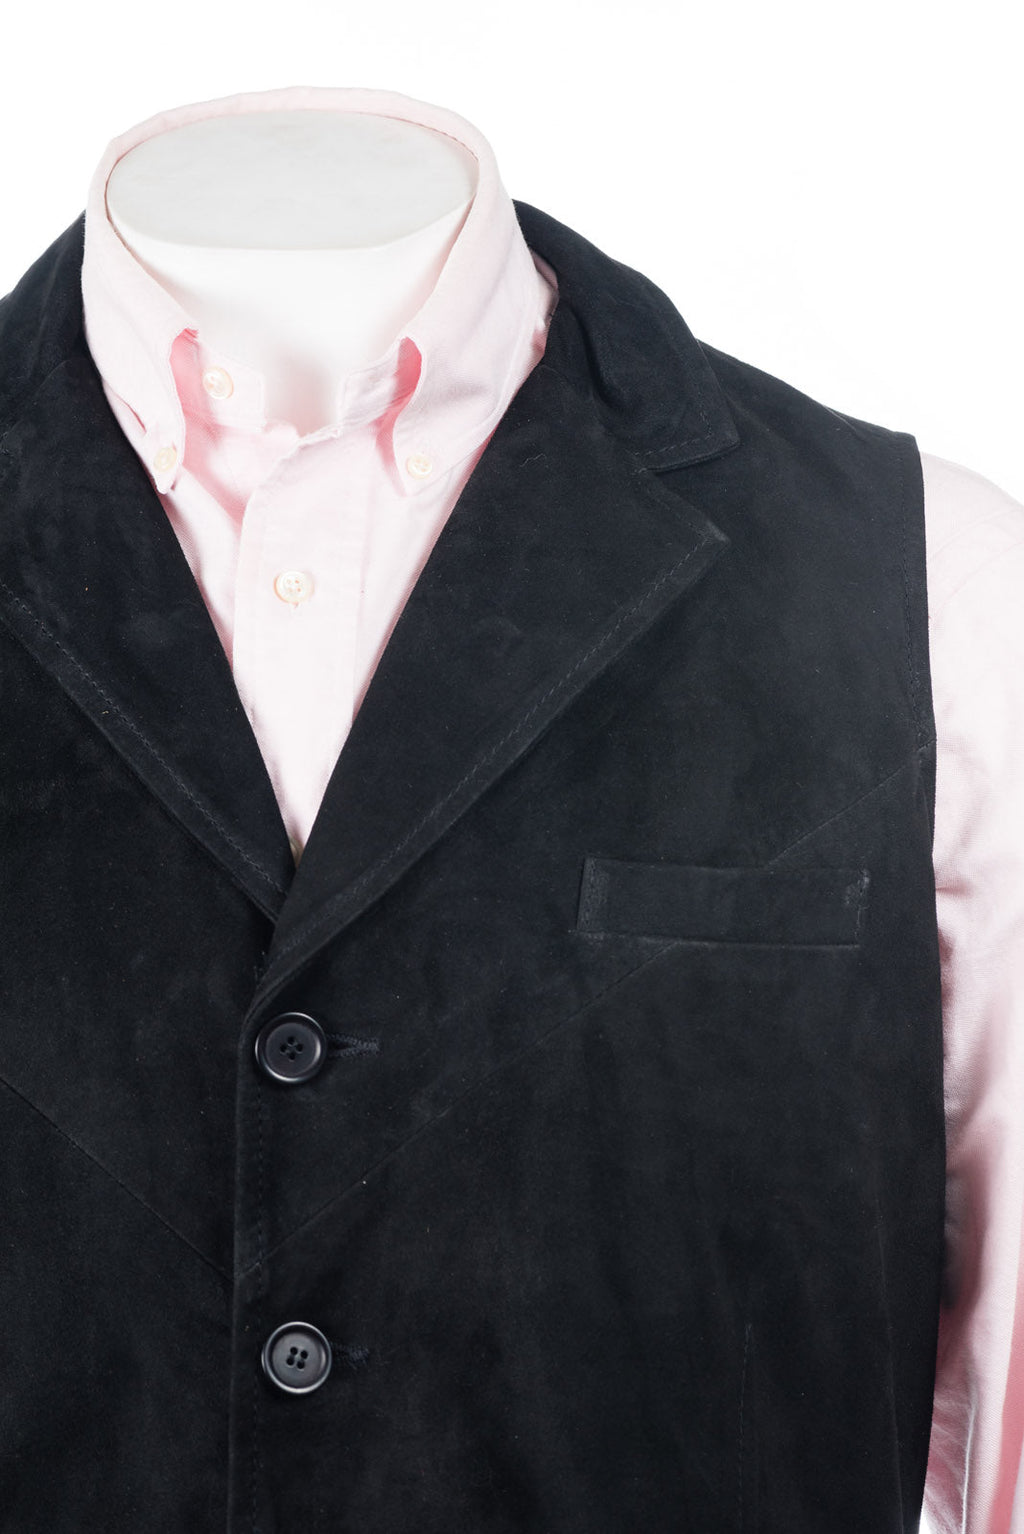 Men's Black Collared Button-Up Suede Waistcoat: Aurelio